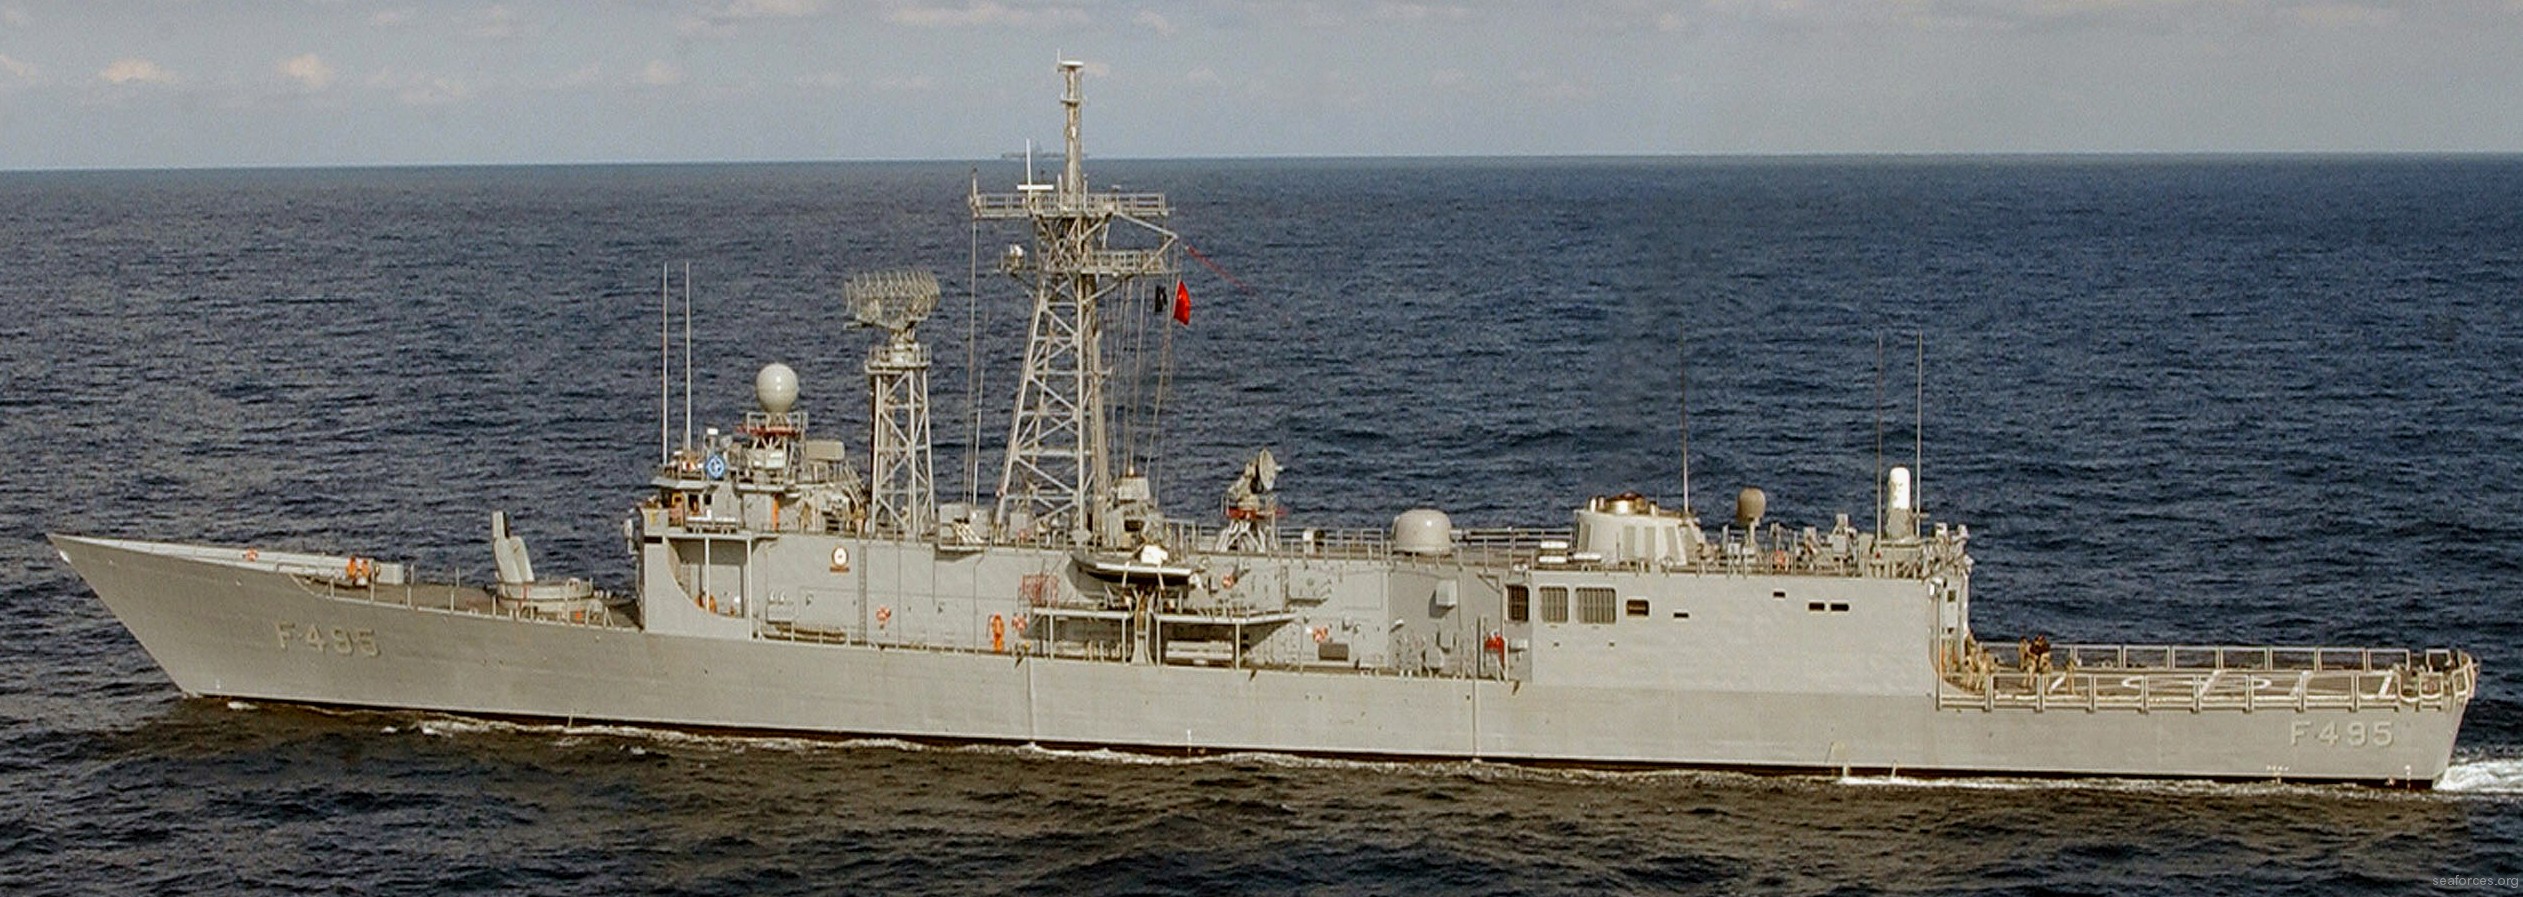 f-495 tcg gediz gabya g-class perry frigate ffg turkish navy türk deniz kuvvetleri 06